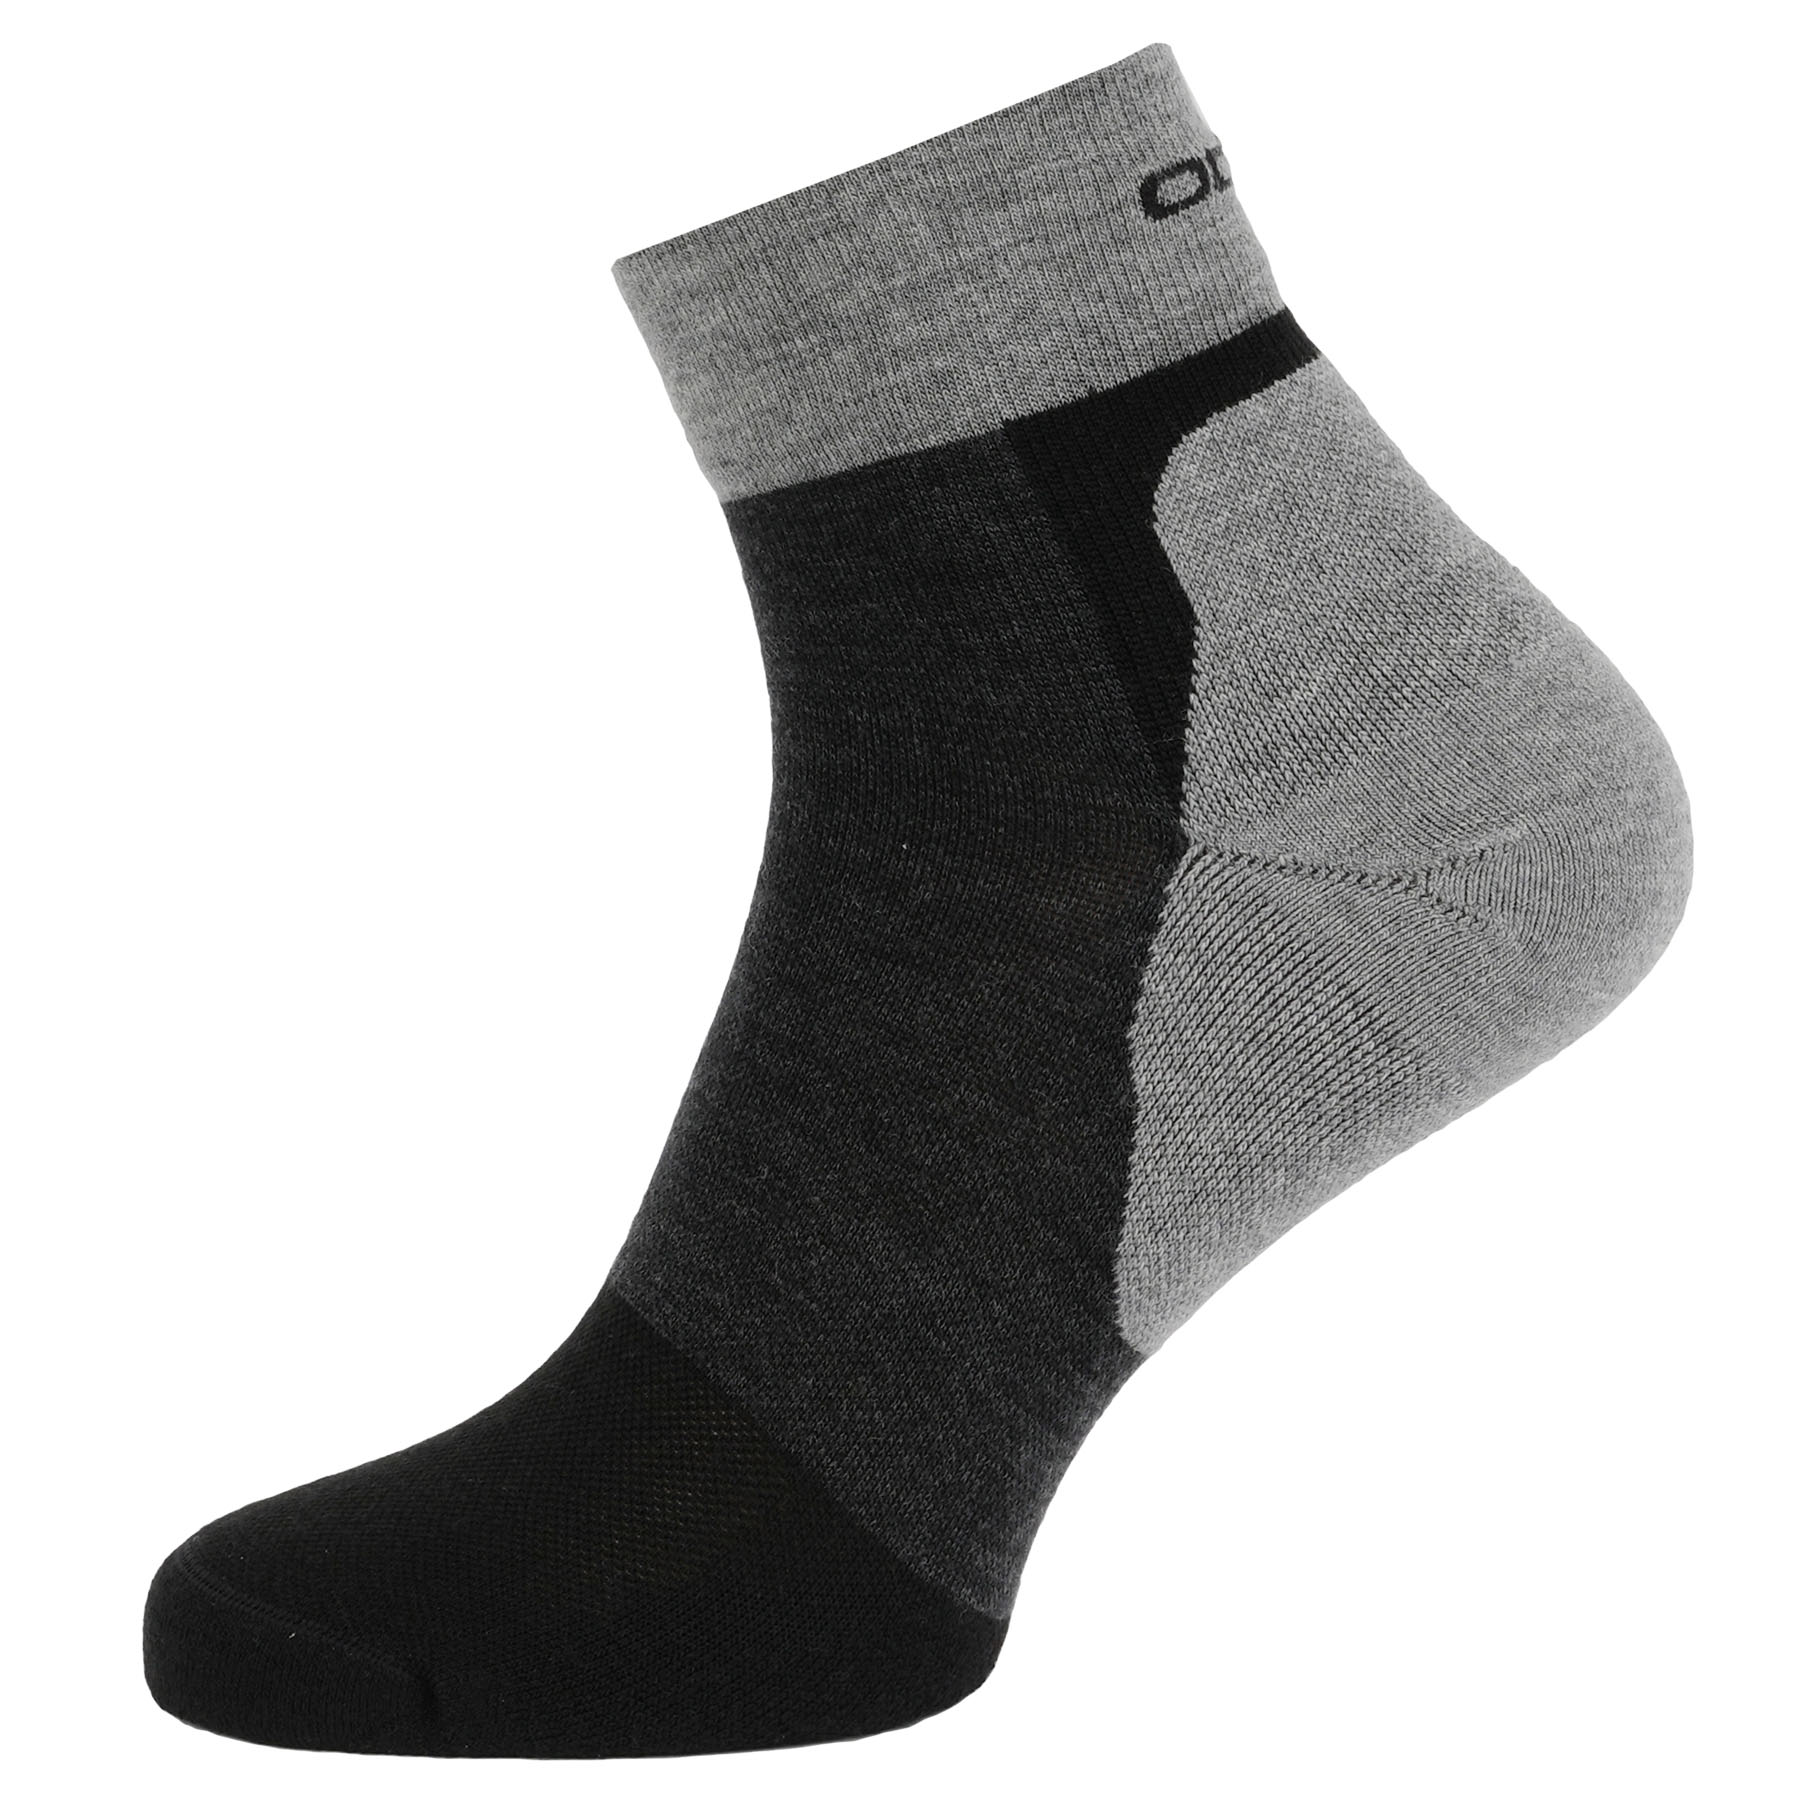 Picture of Odlo Performance Wool Quarter Hiking Socks - black - new odlo graphite grey